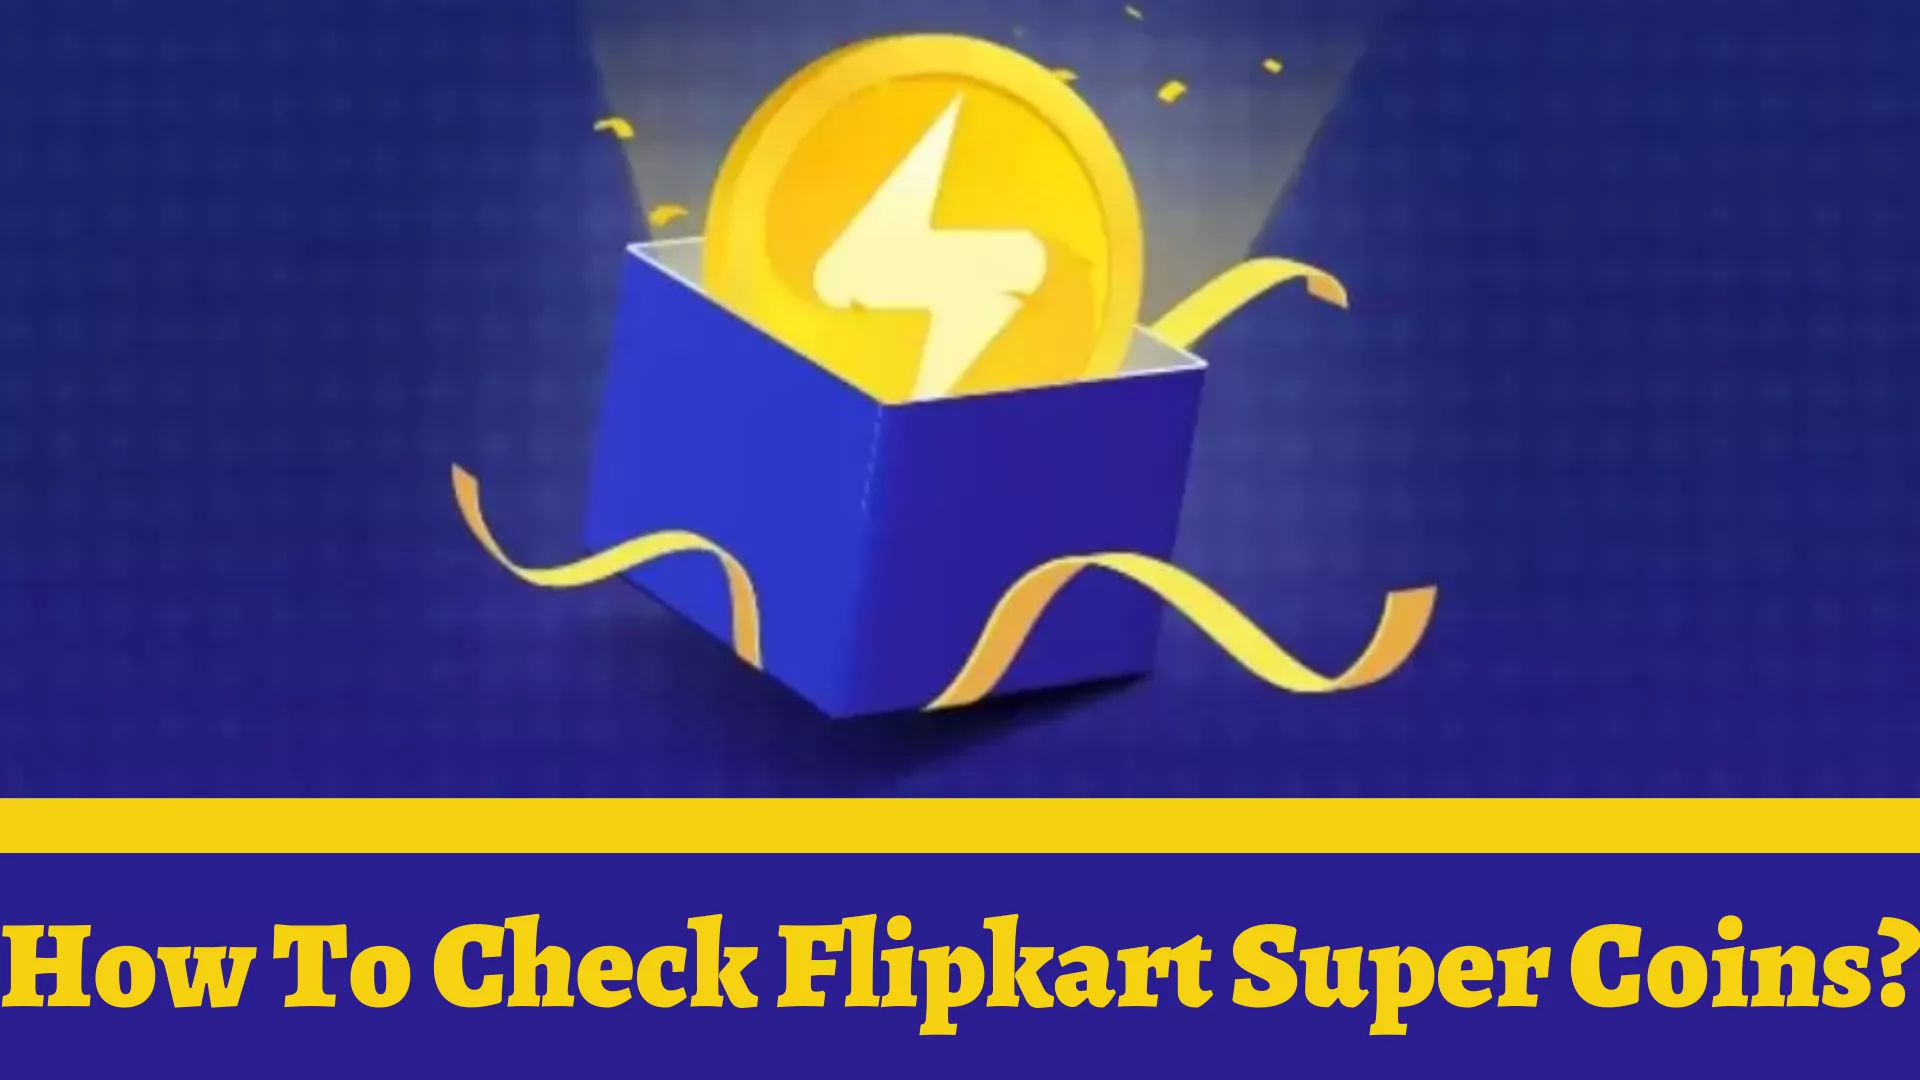 How To Check Flipkart Super Coins?